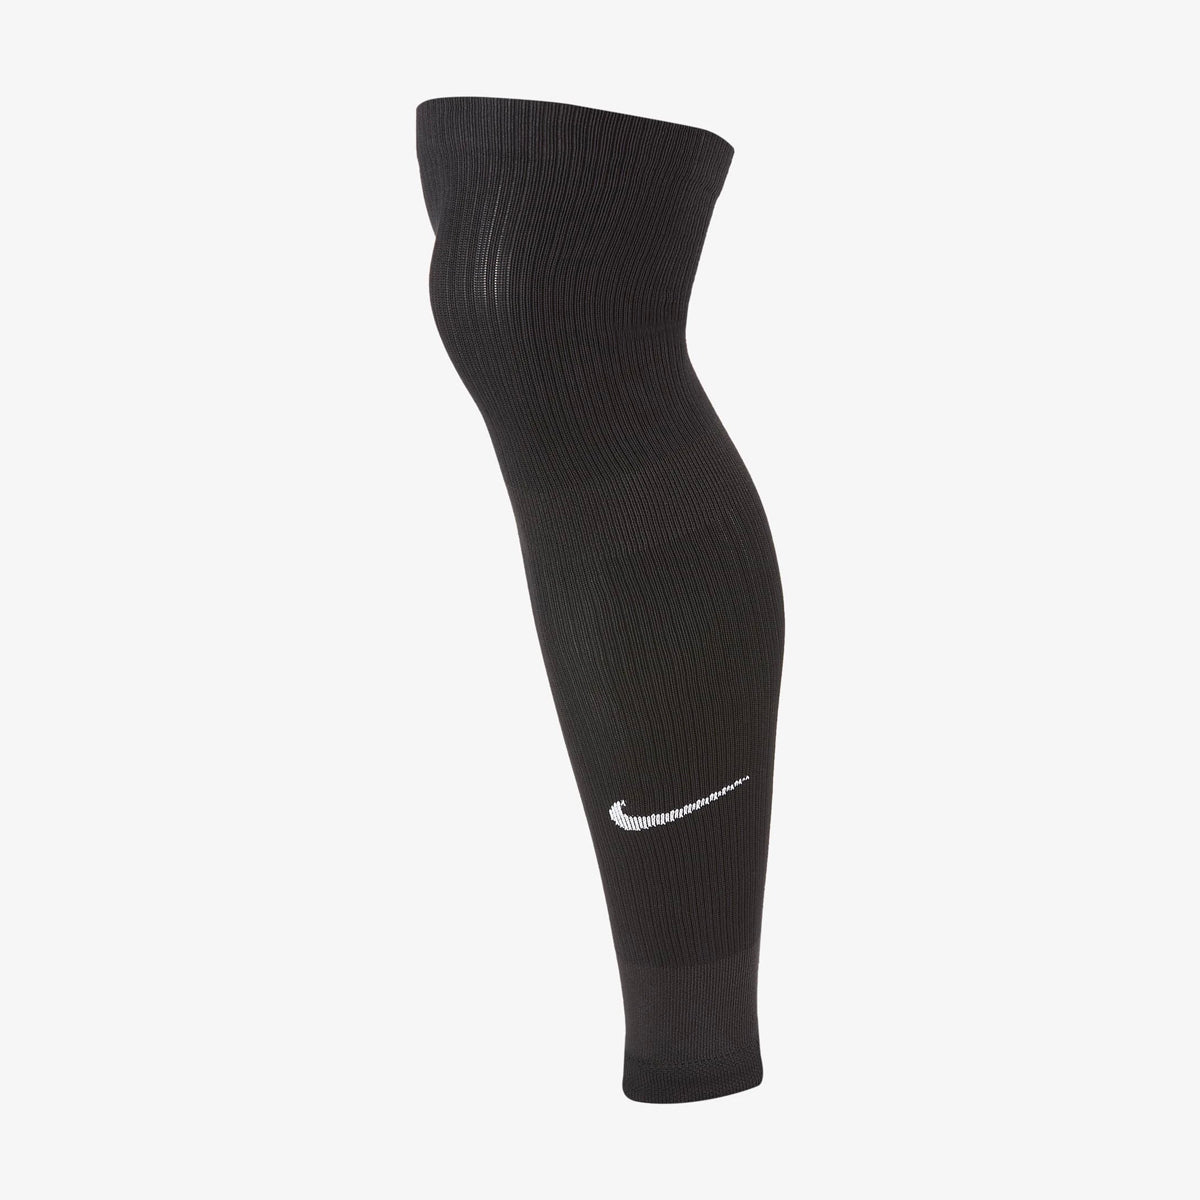 Thriller Danser Sneeuwstorm Nike Squad Leg Sleeve Soccer Sock Black